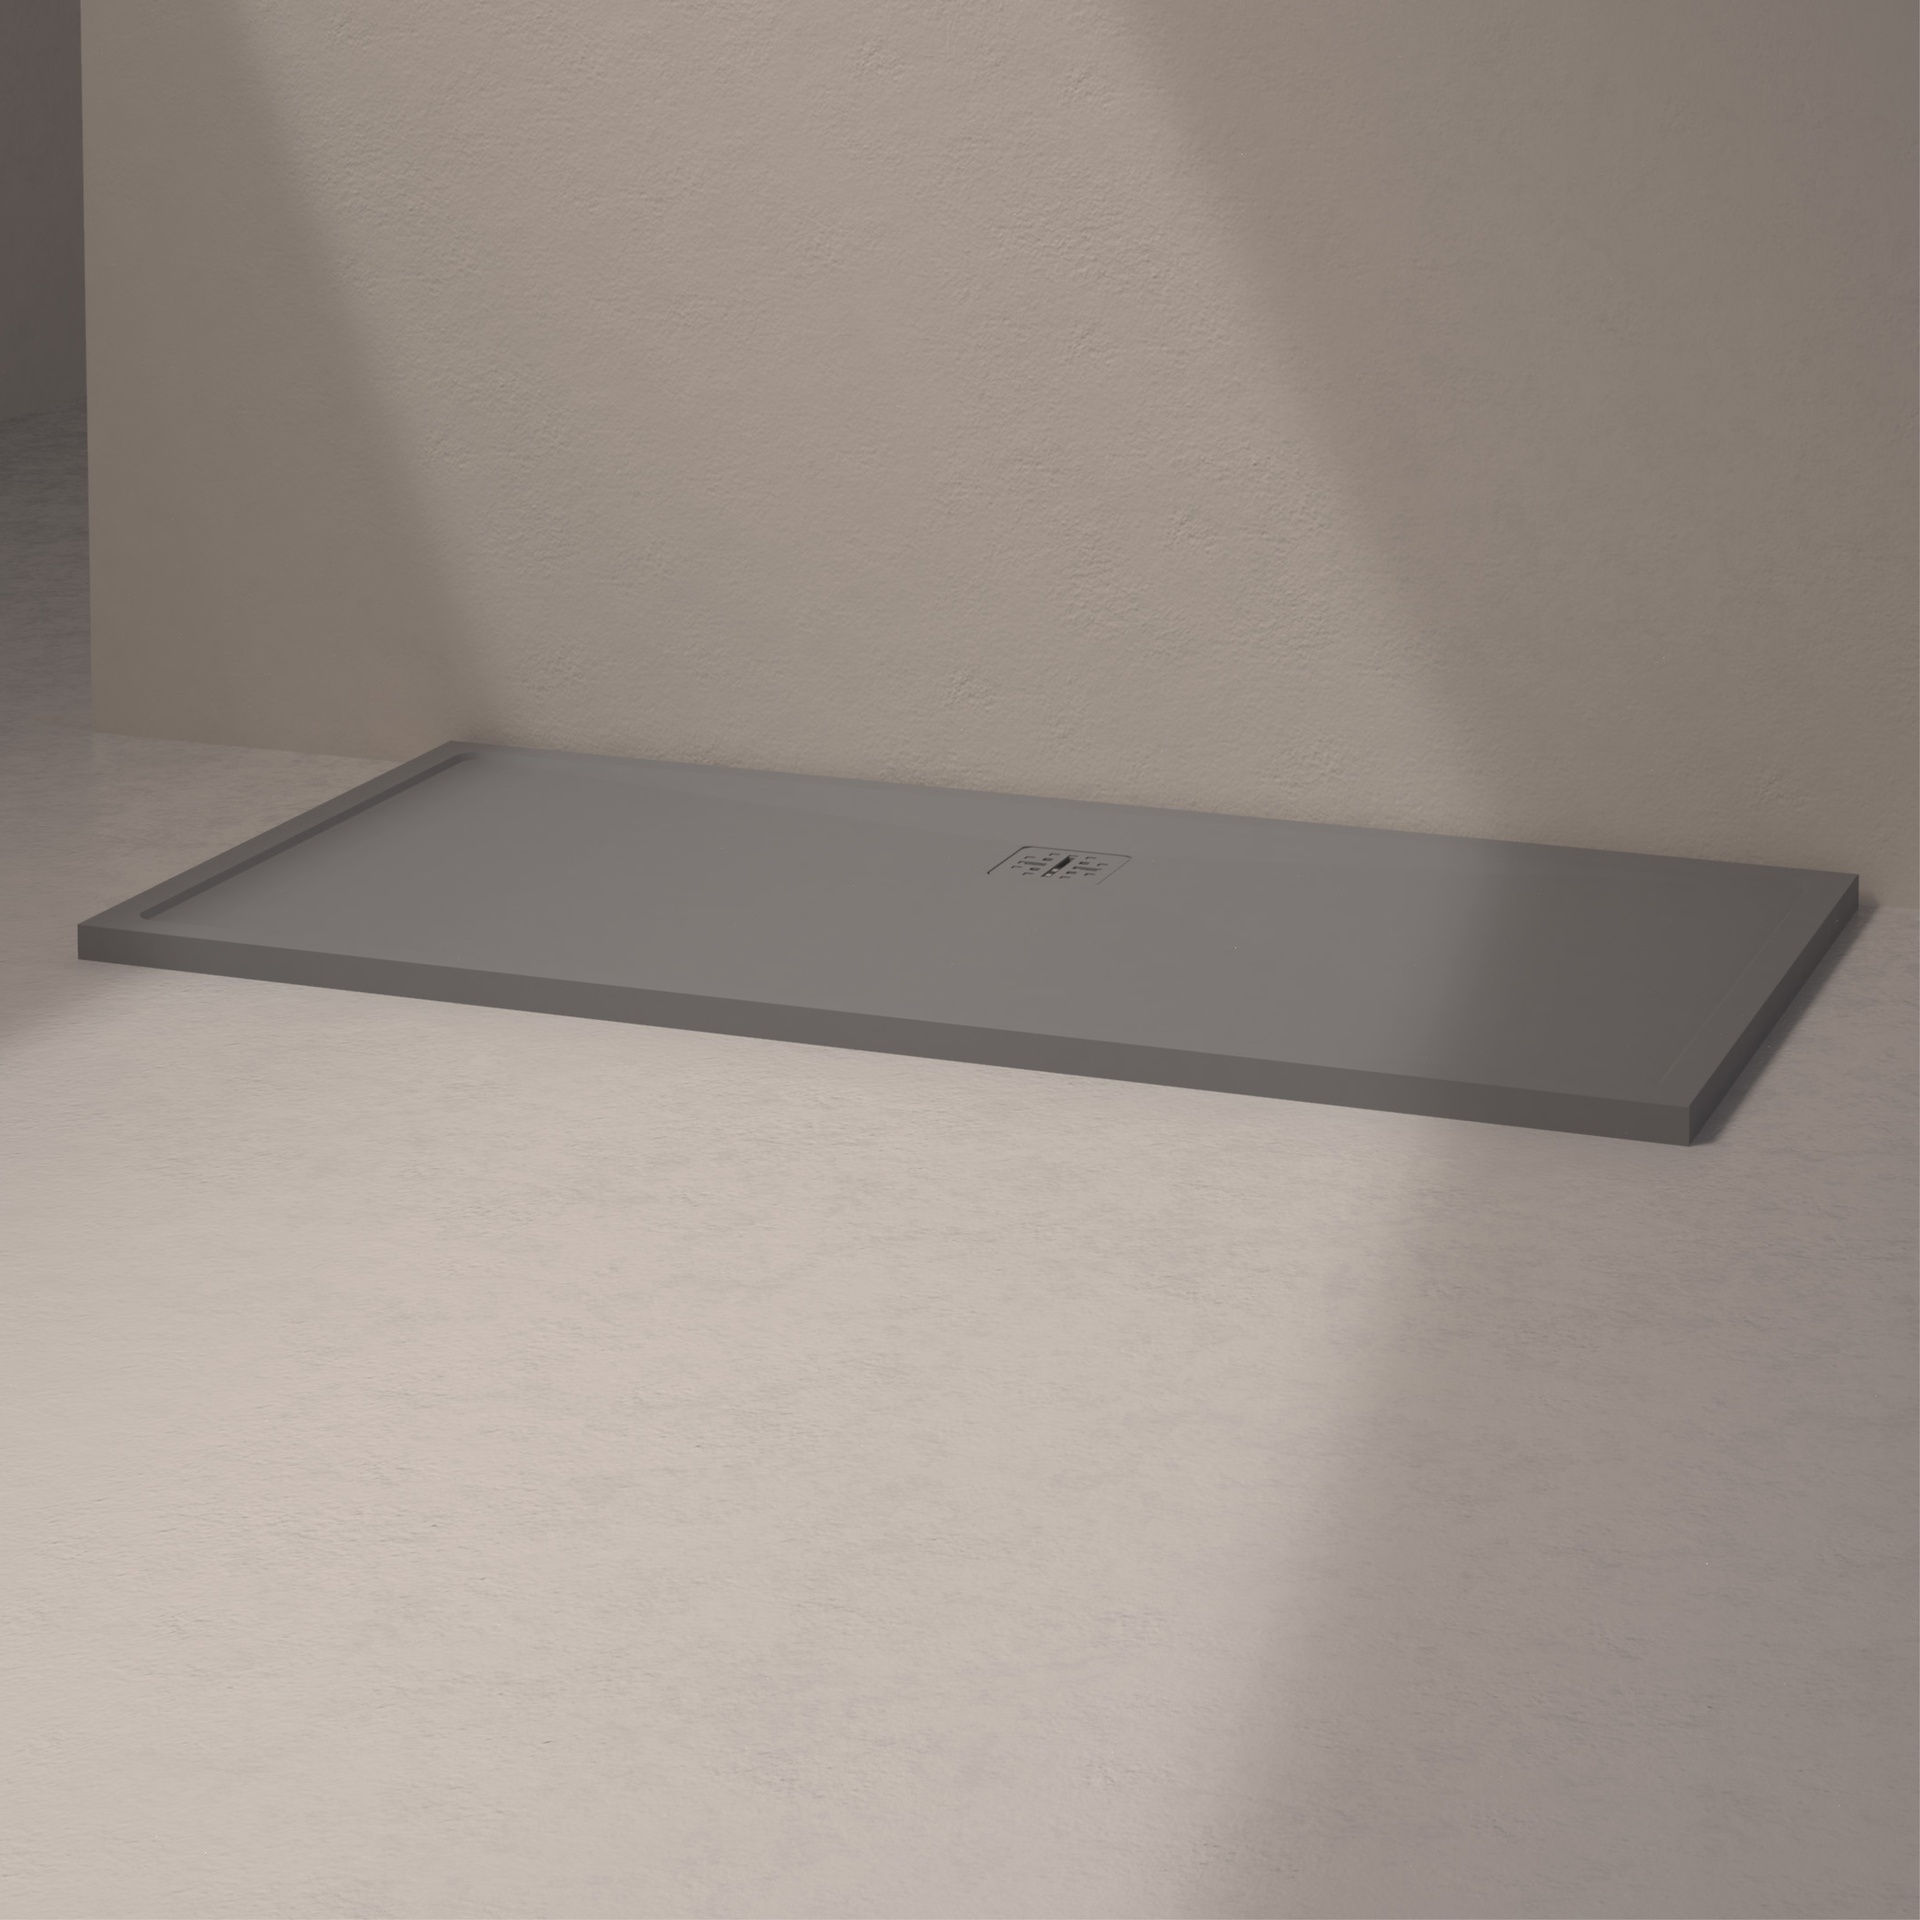 [MSTEL90180-LGREY] Mist shower floor long side drain (180x90, stone light grey)